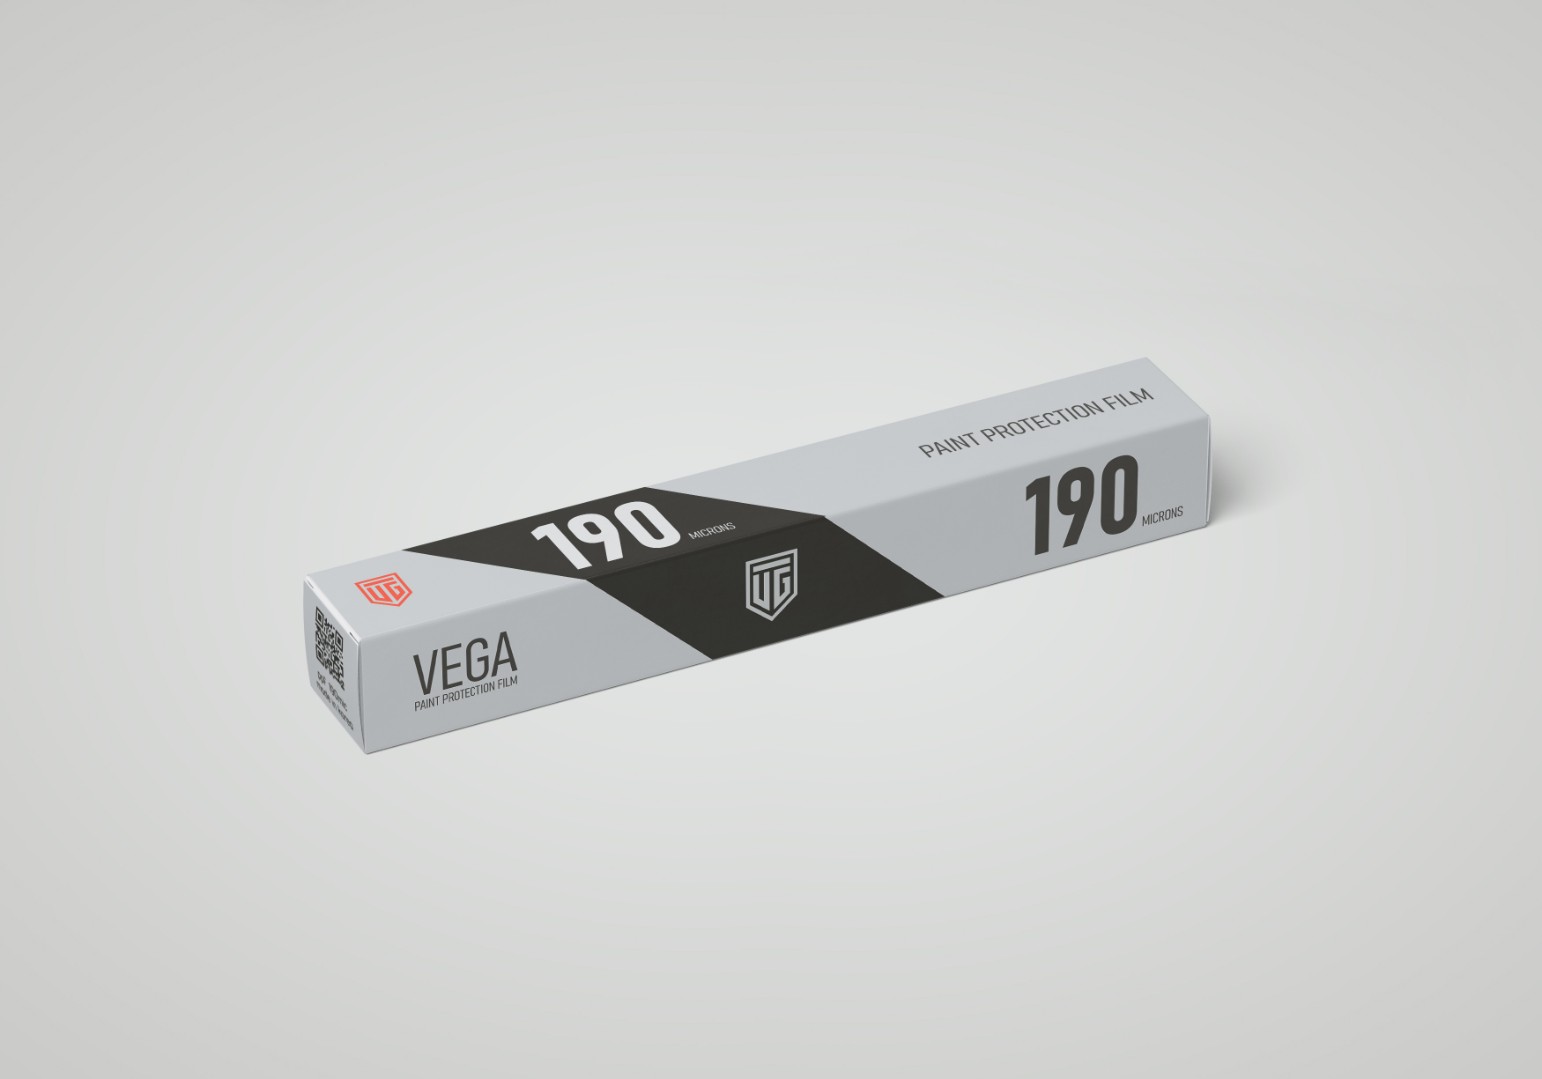 VEGA 190 HT series